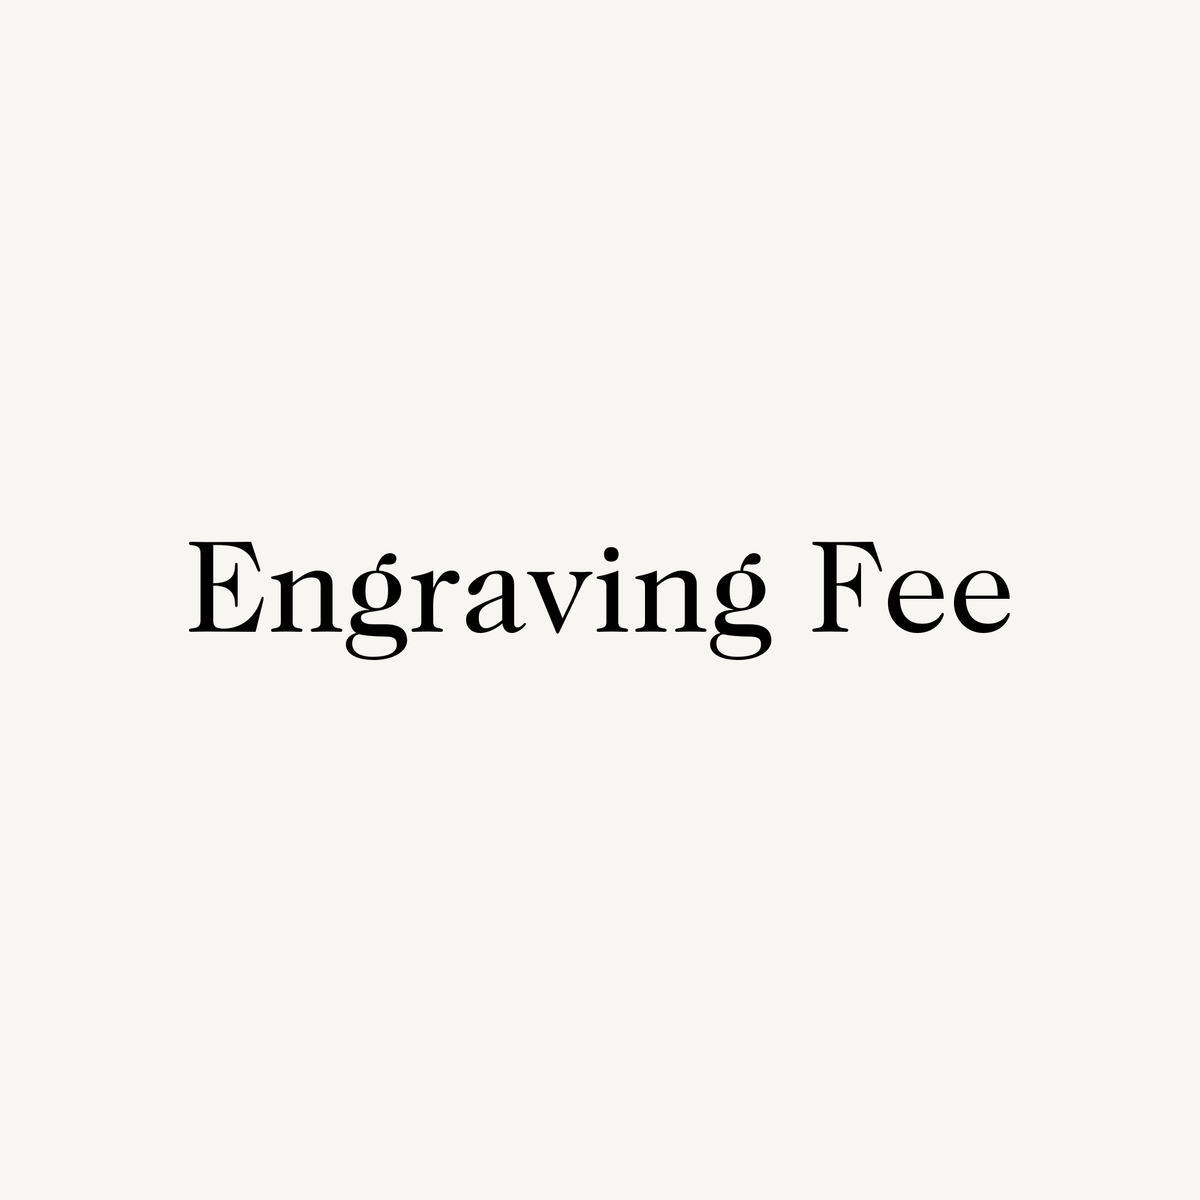 Engraving Fee